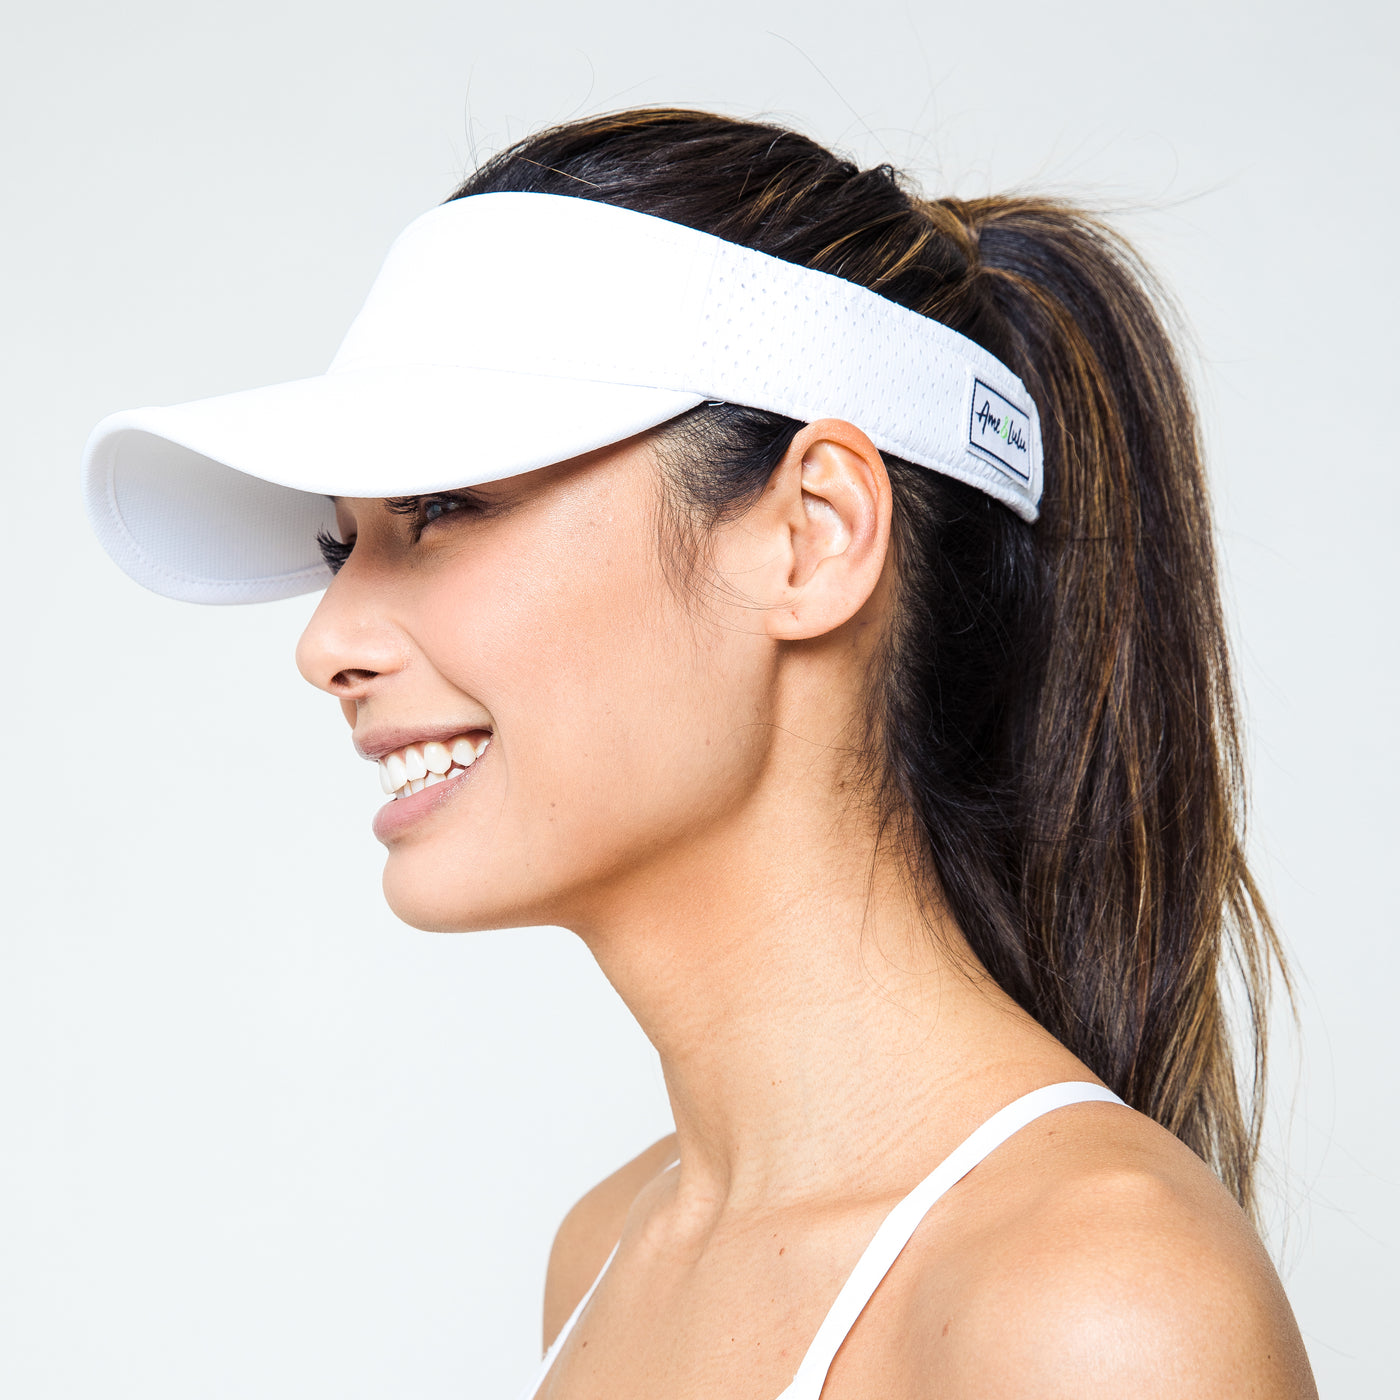 Woman wears white performance visor